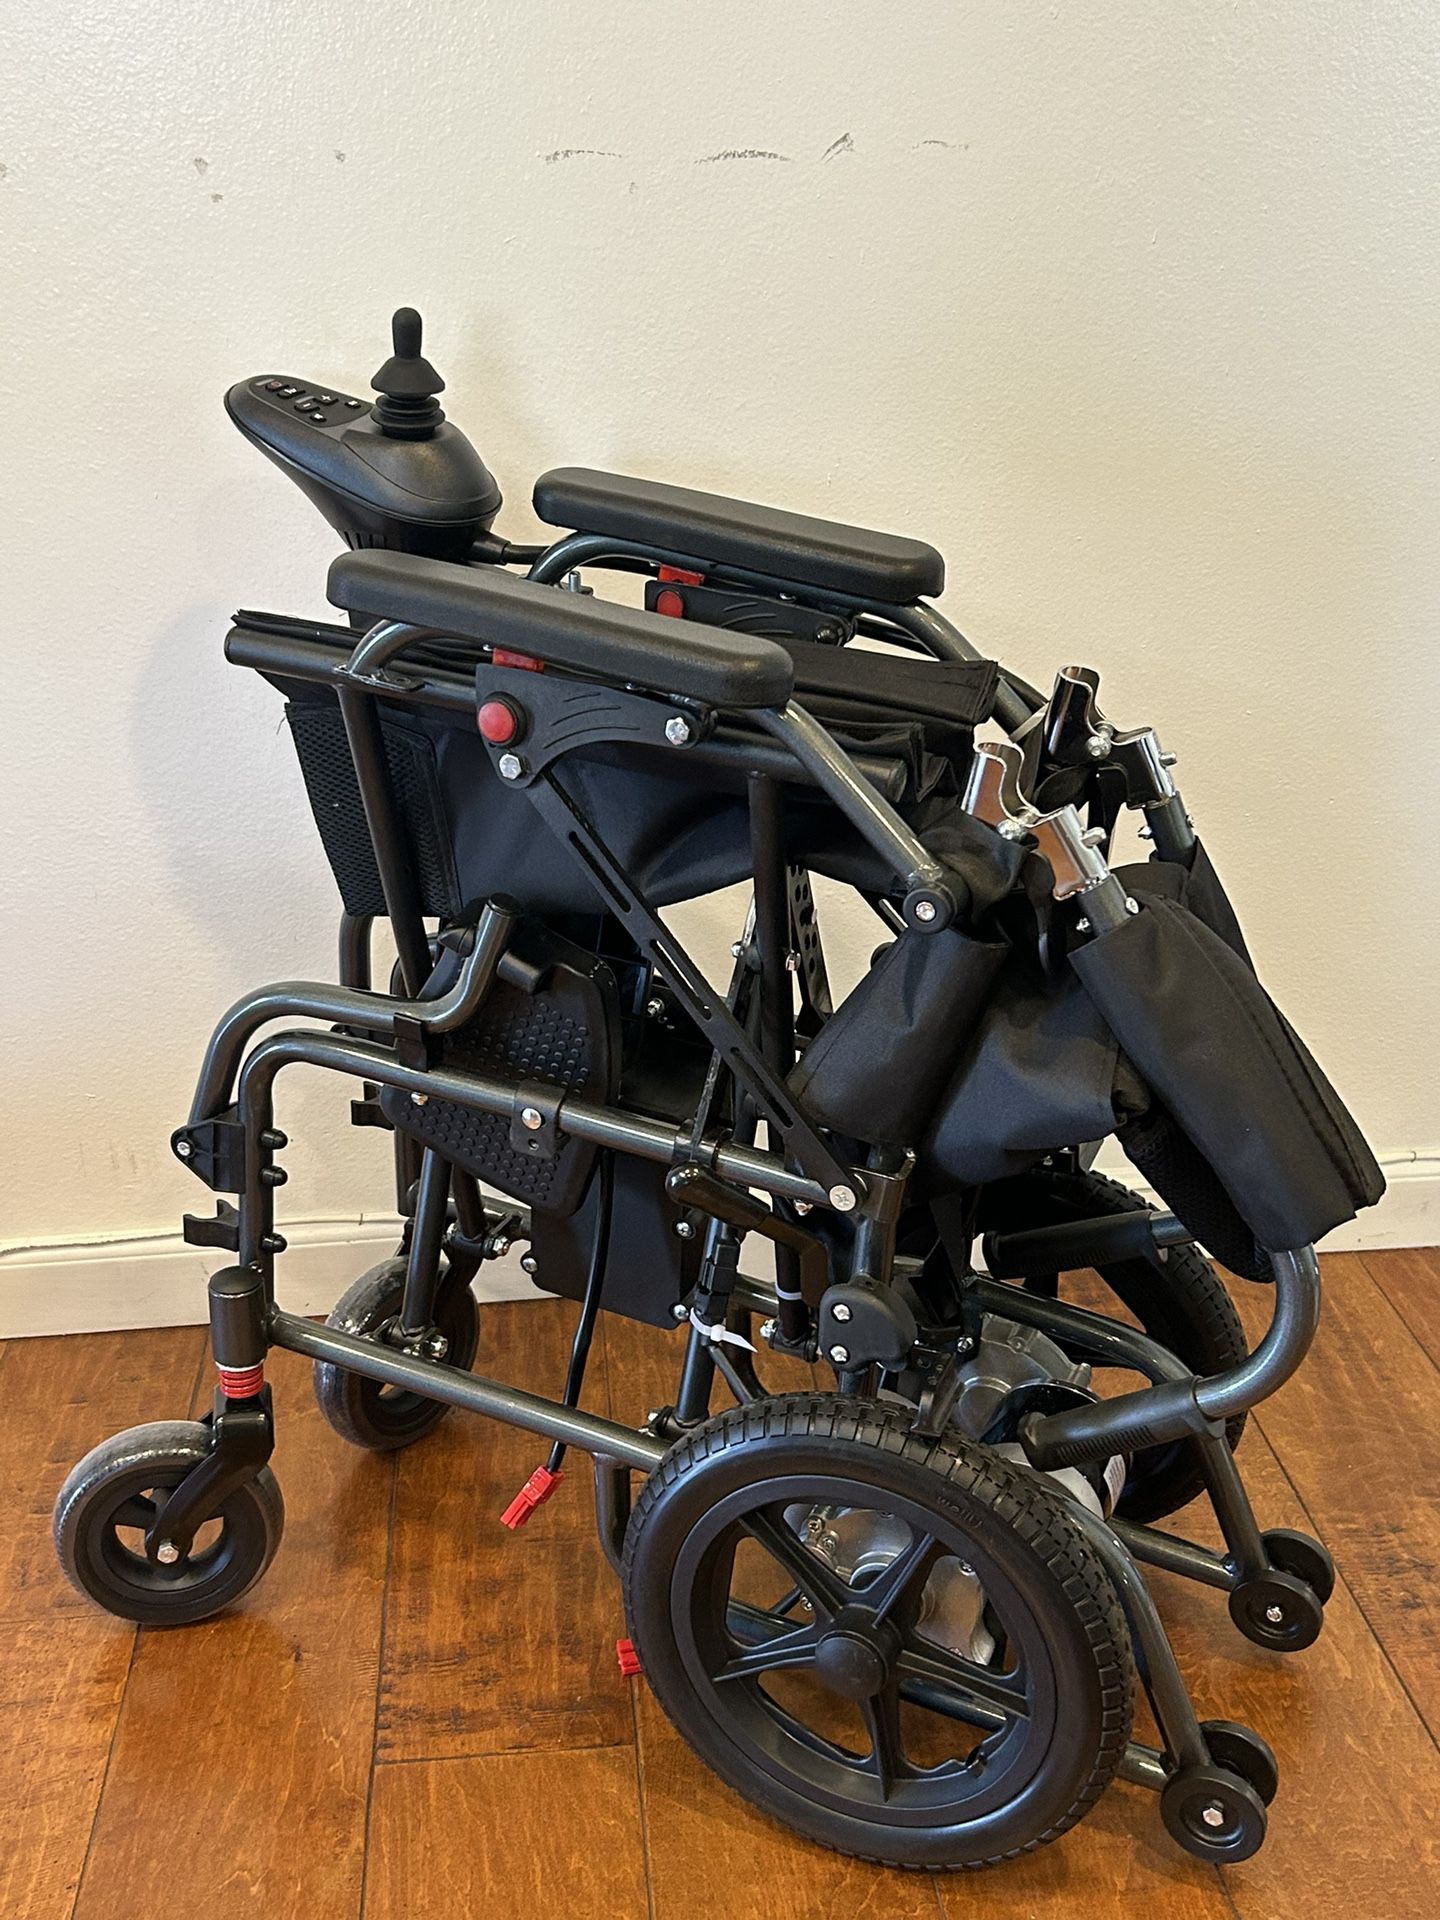 Light Electric Wheelchair Silla Electrics